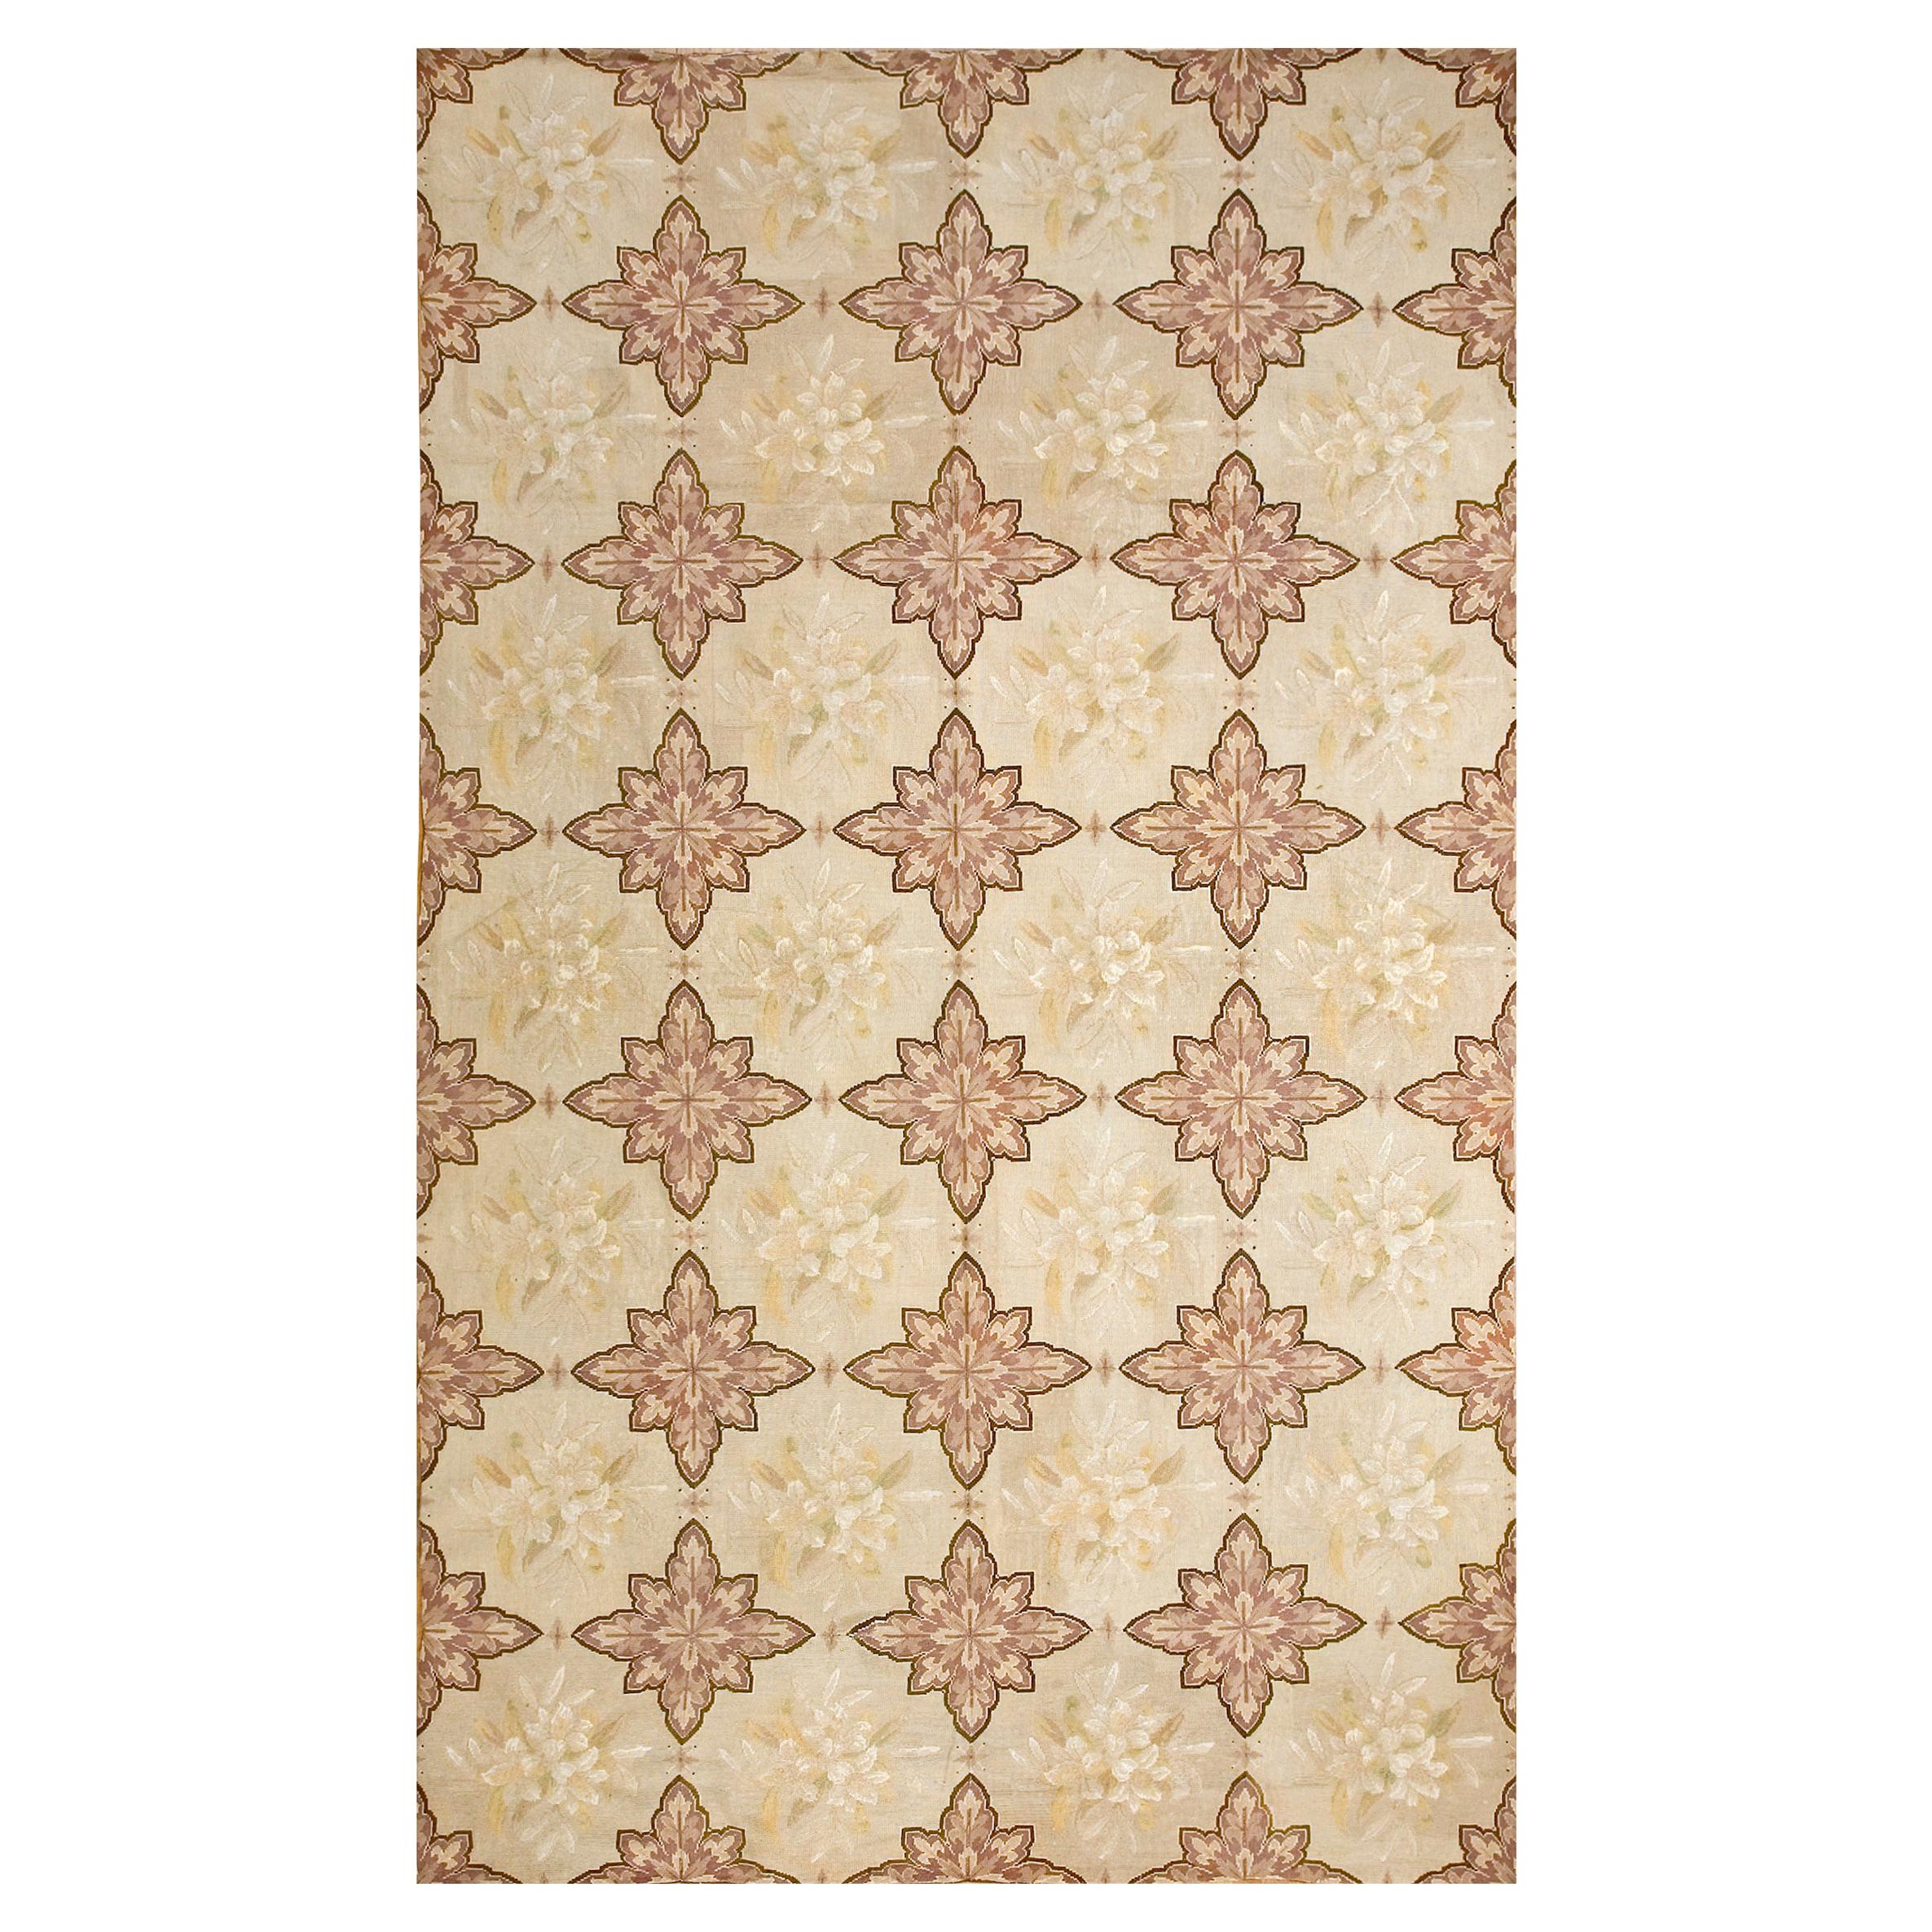 19th Century French Needlepoint Carpet ( 7'4" x 12'4" - 224 x 376 )